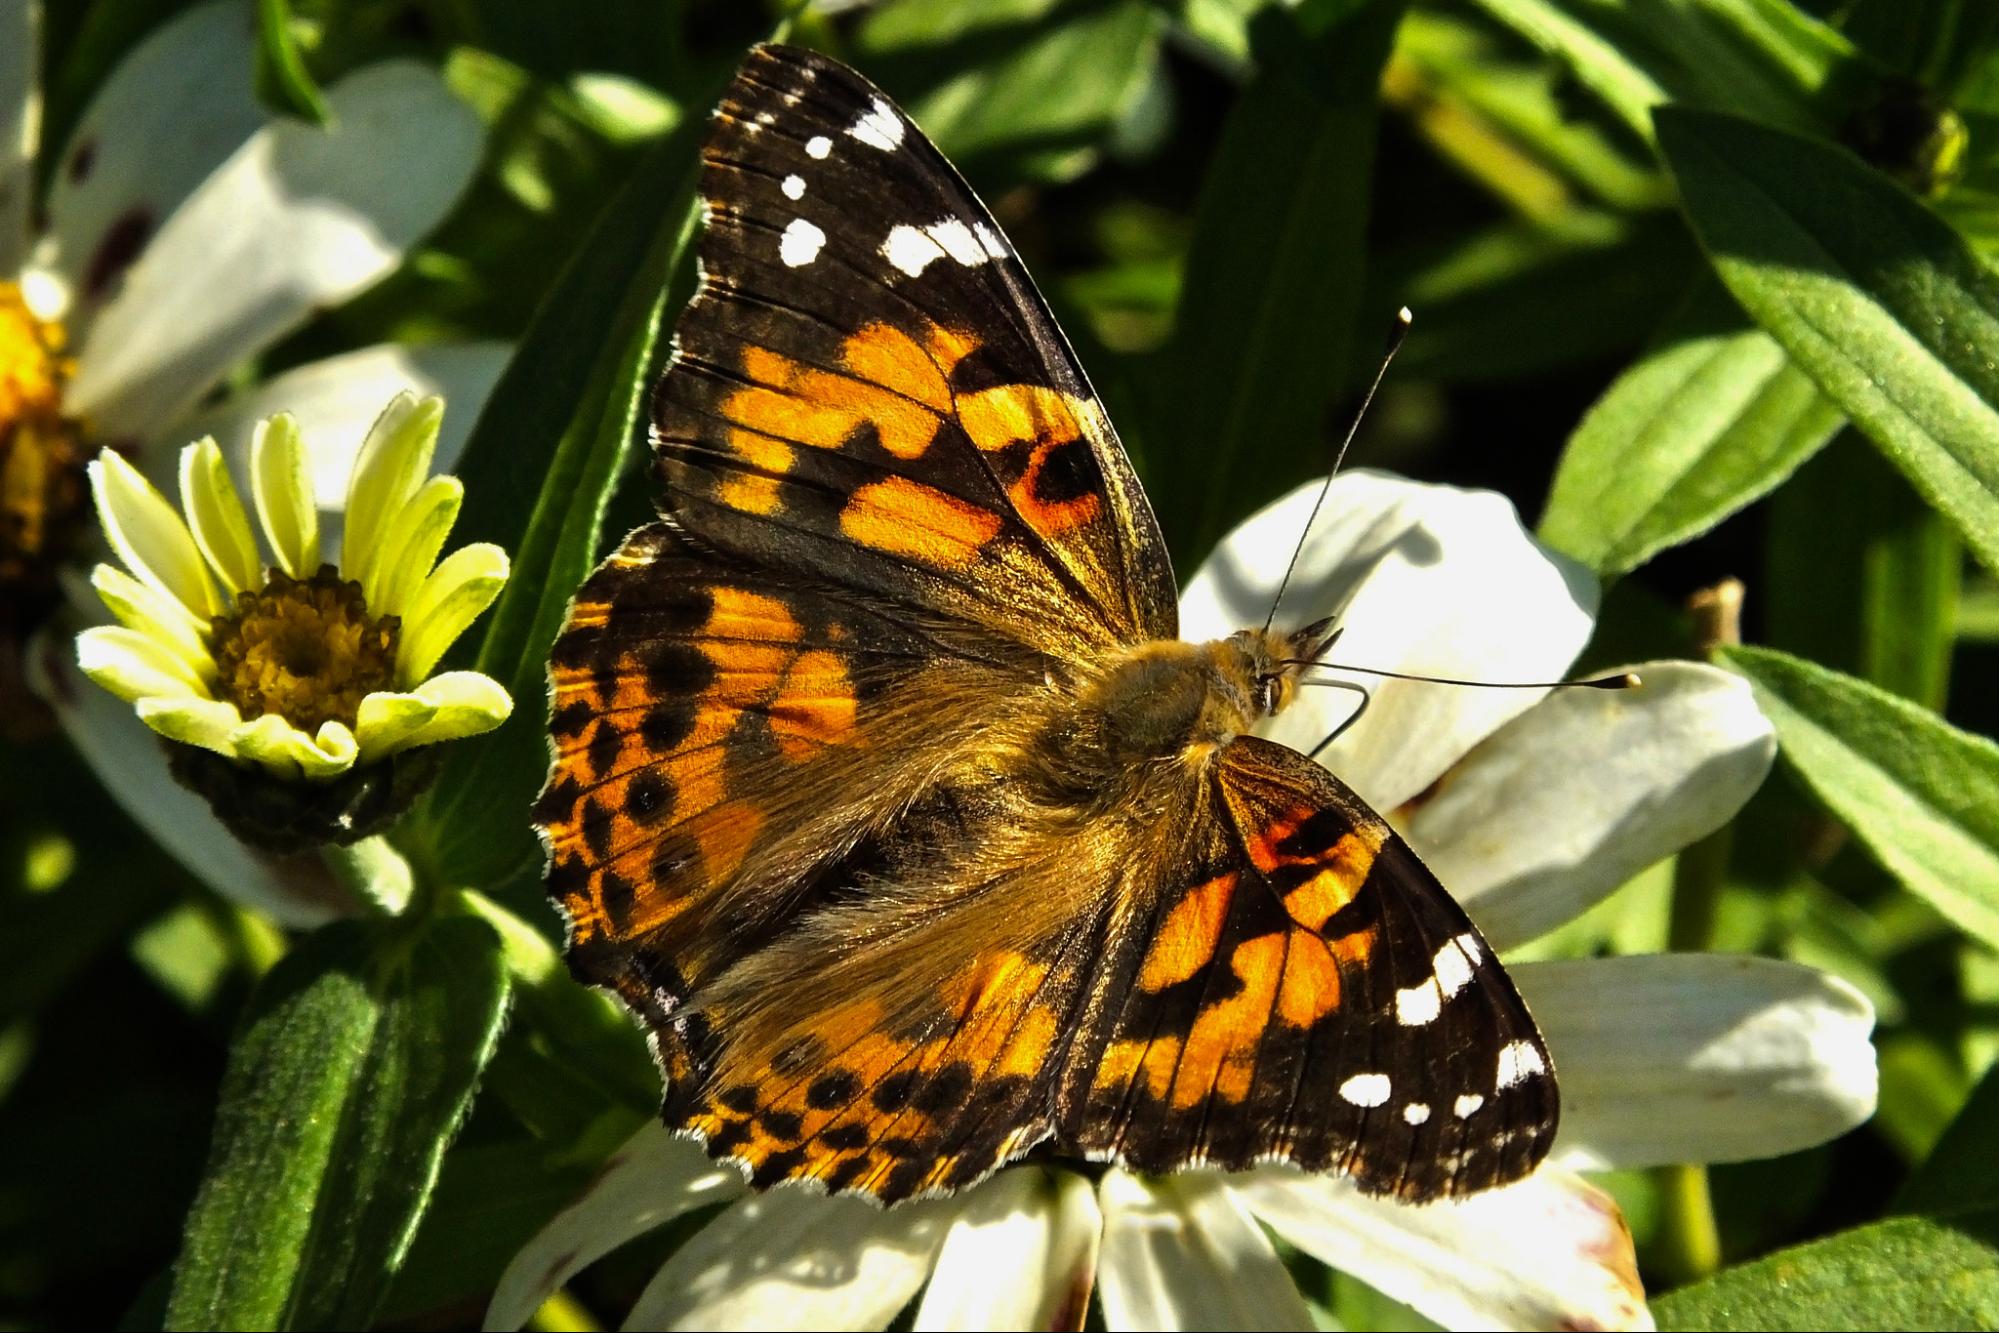 The Last Leg of the Longest Butterfly Migration Identified